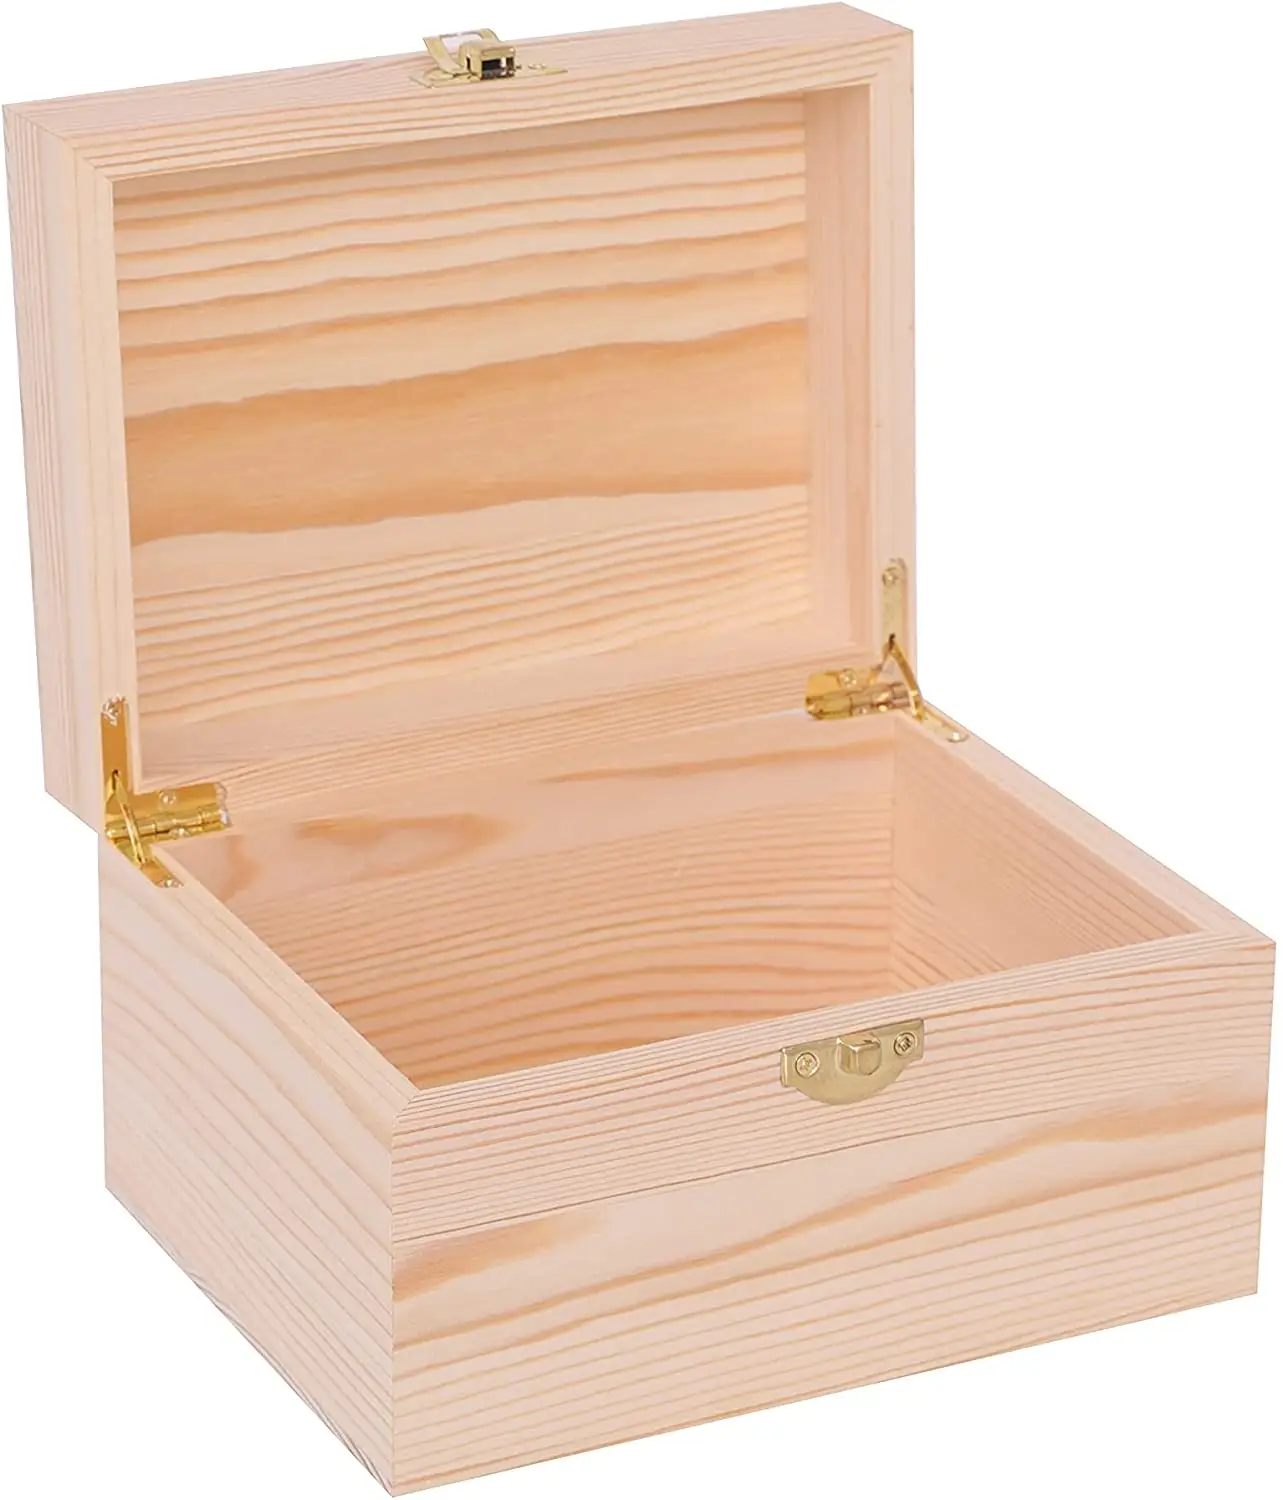 Lovely pine wood trinket storage presentation box RN131 gift silver clasp 